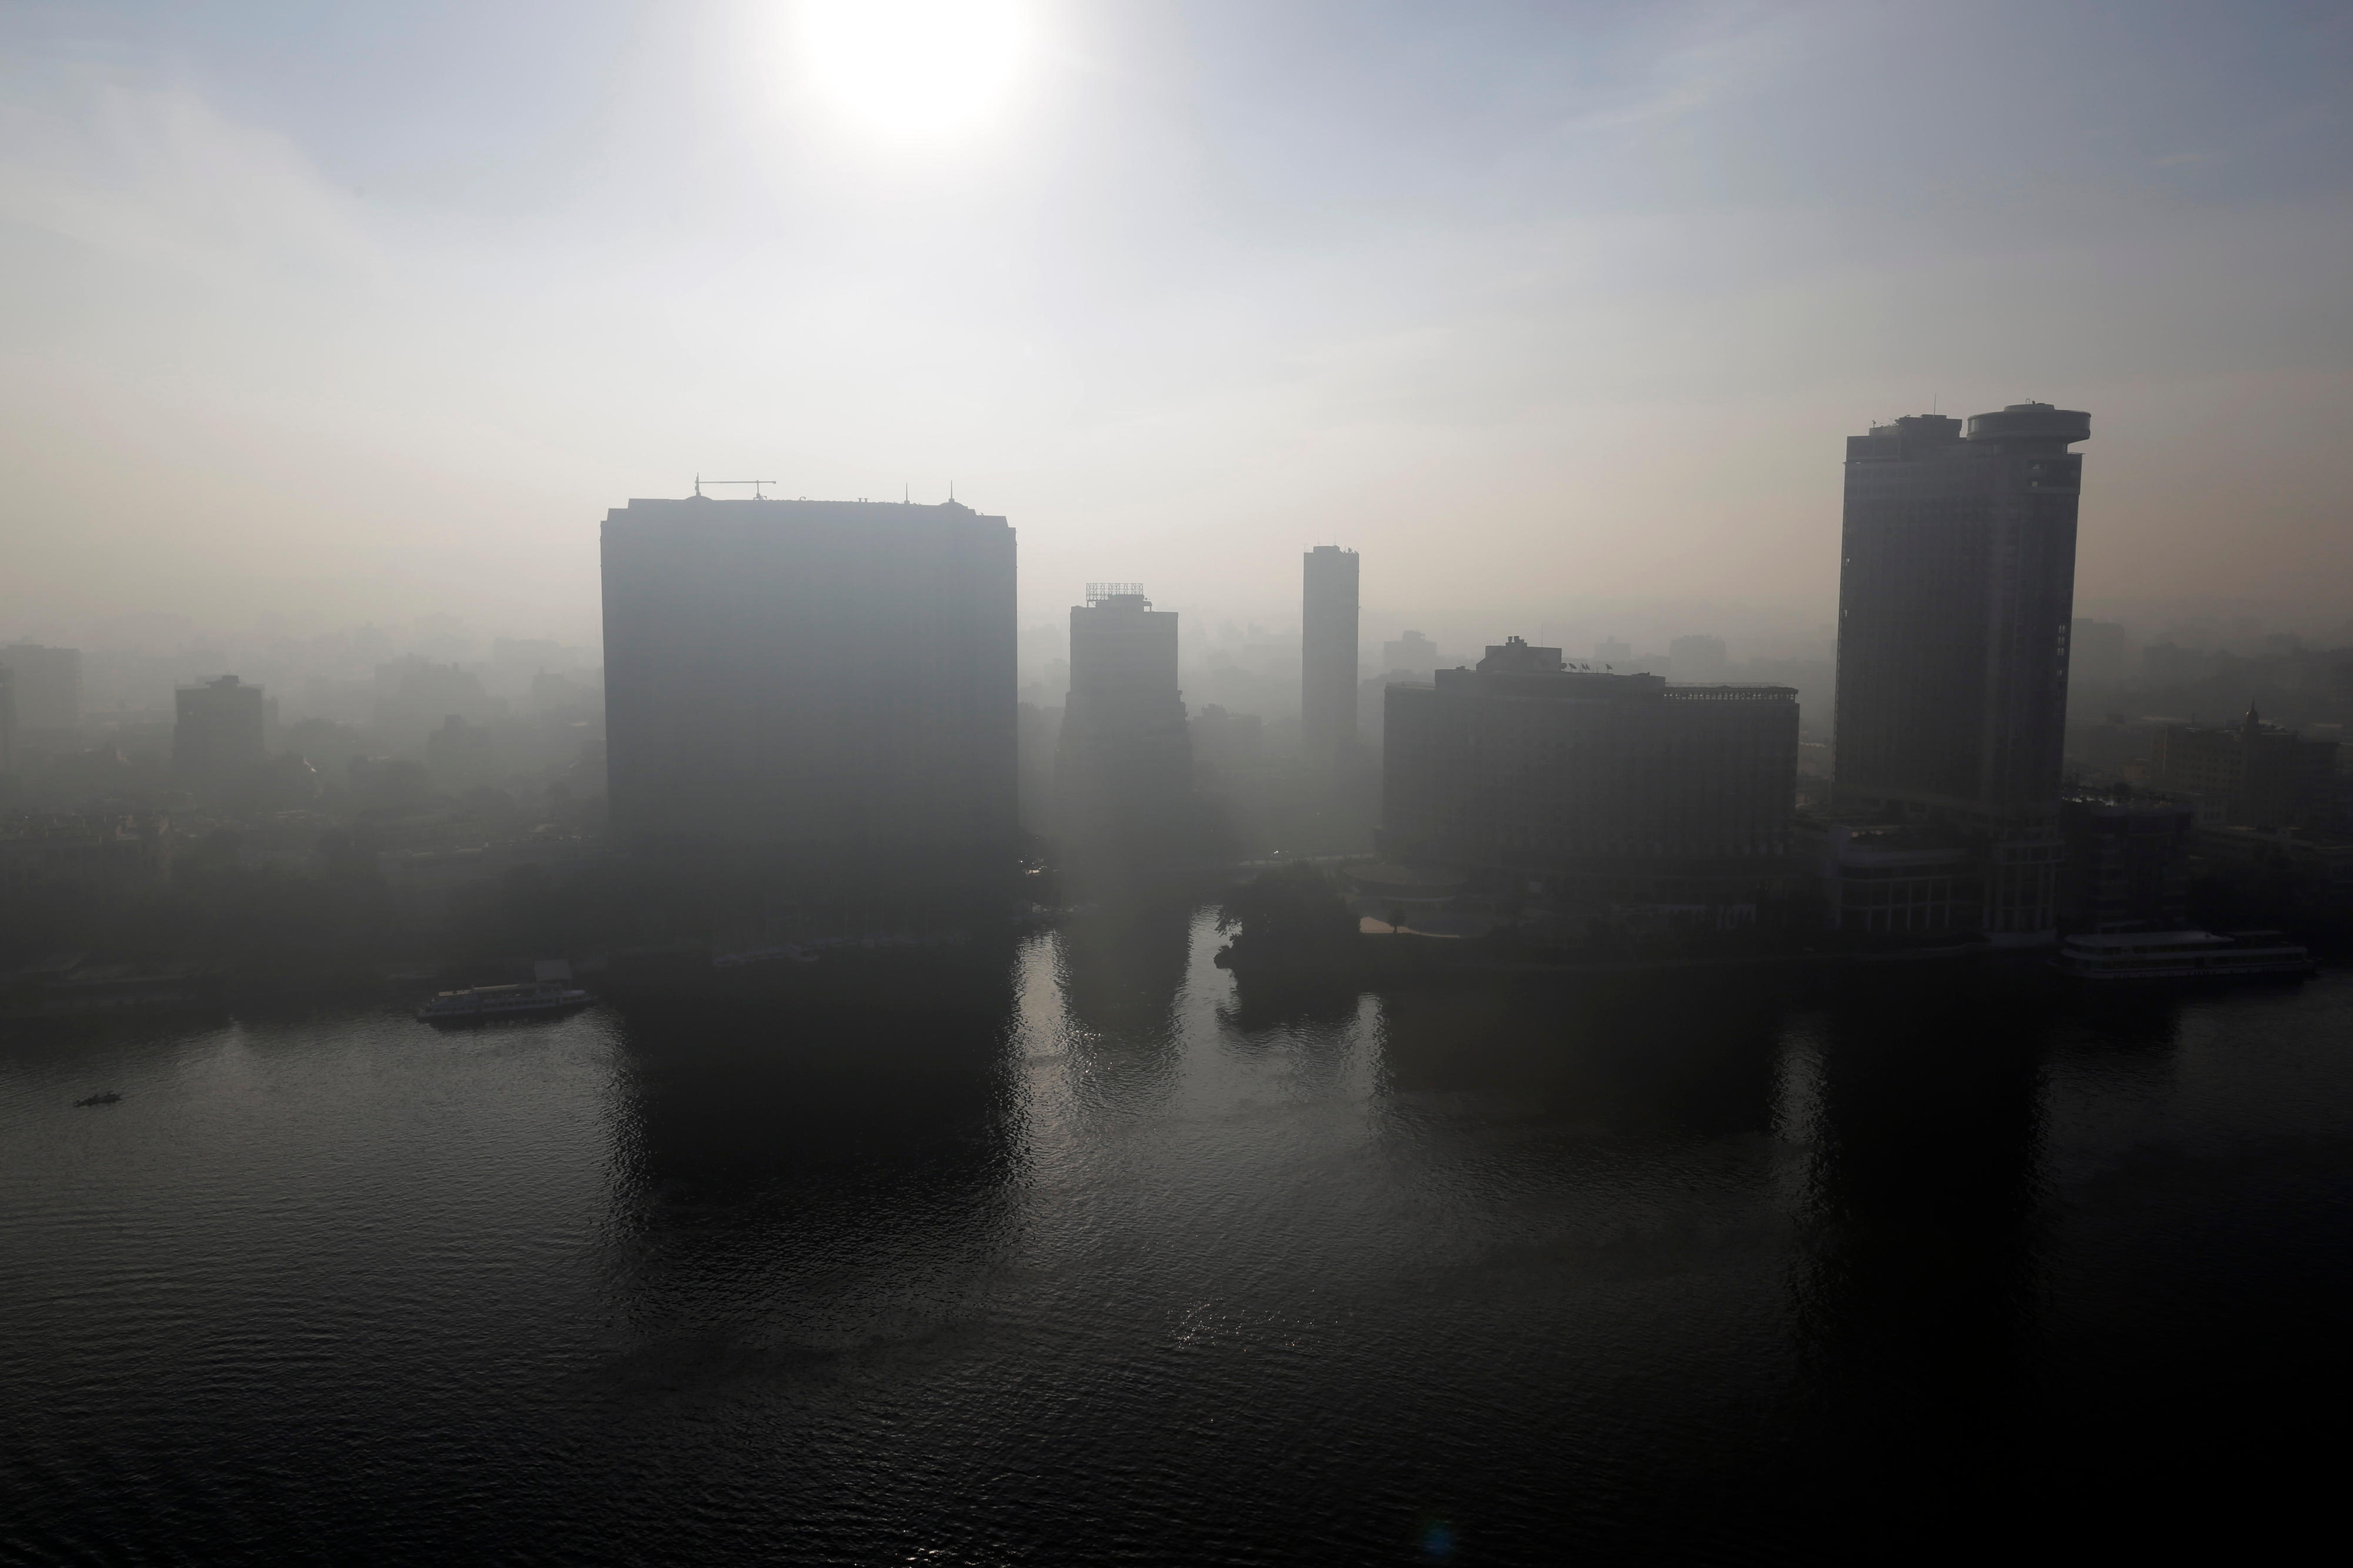 Smog in Cairo